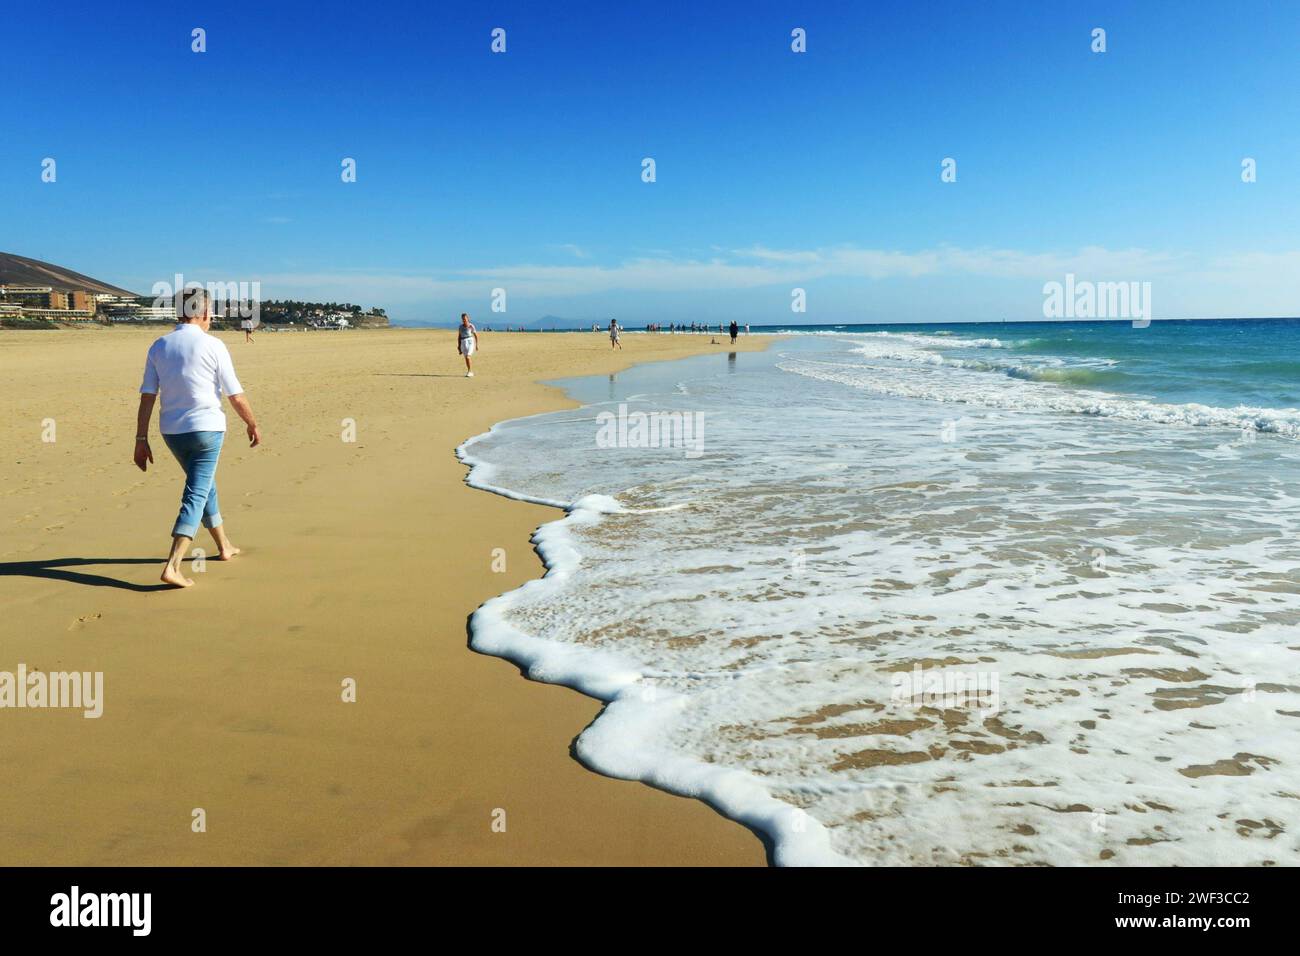 Frauen allein am Strand von Jandia auf Fuerteventura anzutreffen keine Seltenheit - hier gesehen am 24.01.2018 *** le donne sole sulla spiaggia di Jandia a Fuerteventura non è una rarità vista qui il 24 01 2018 Foto Stock